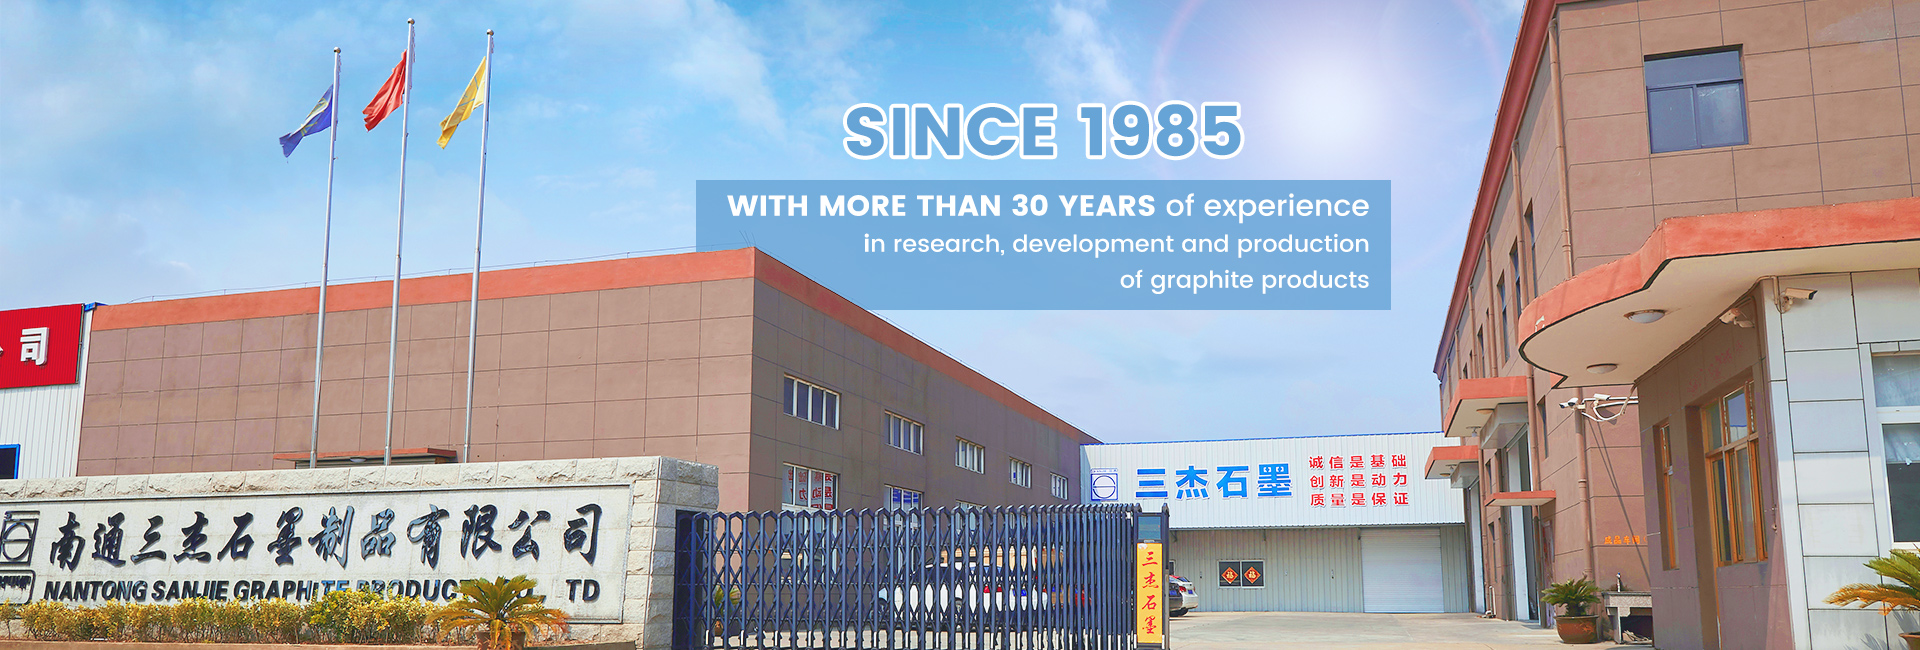 شركة Nantong Sanjie Graphite Products Co.، Ltd.